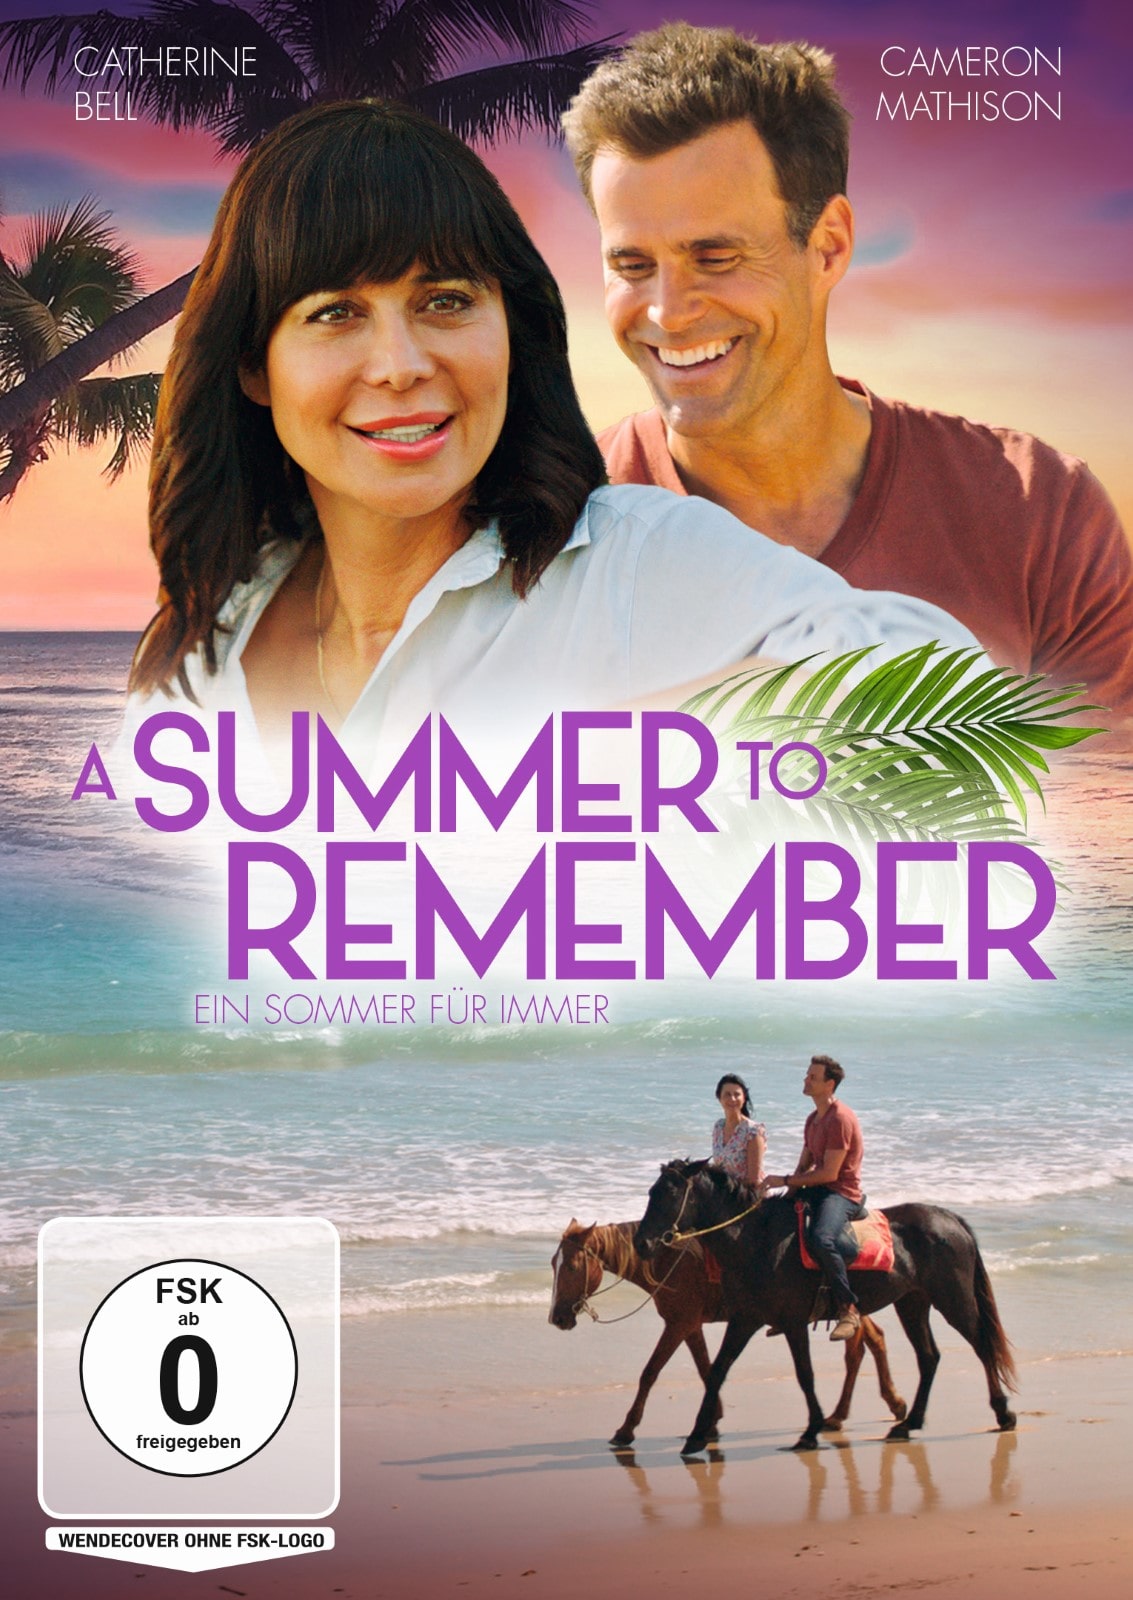 A Summer To Remember Film 2018 FILMSTARTS.de